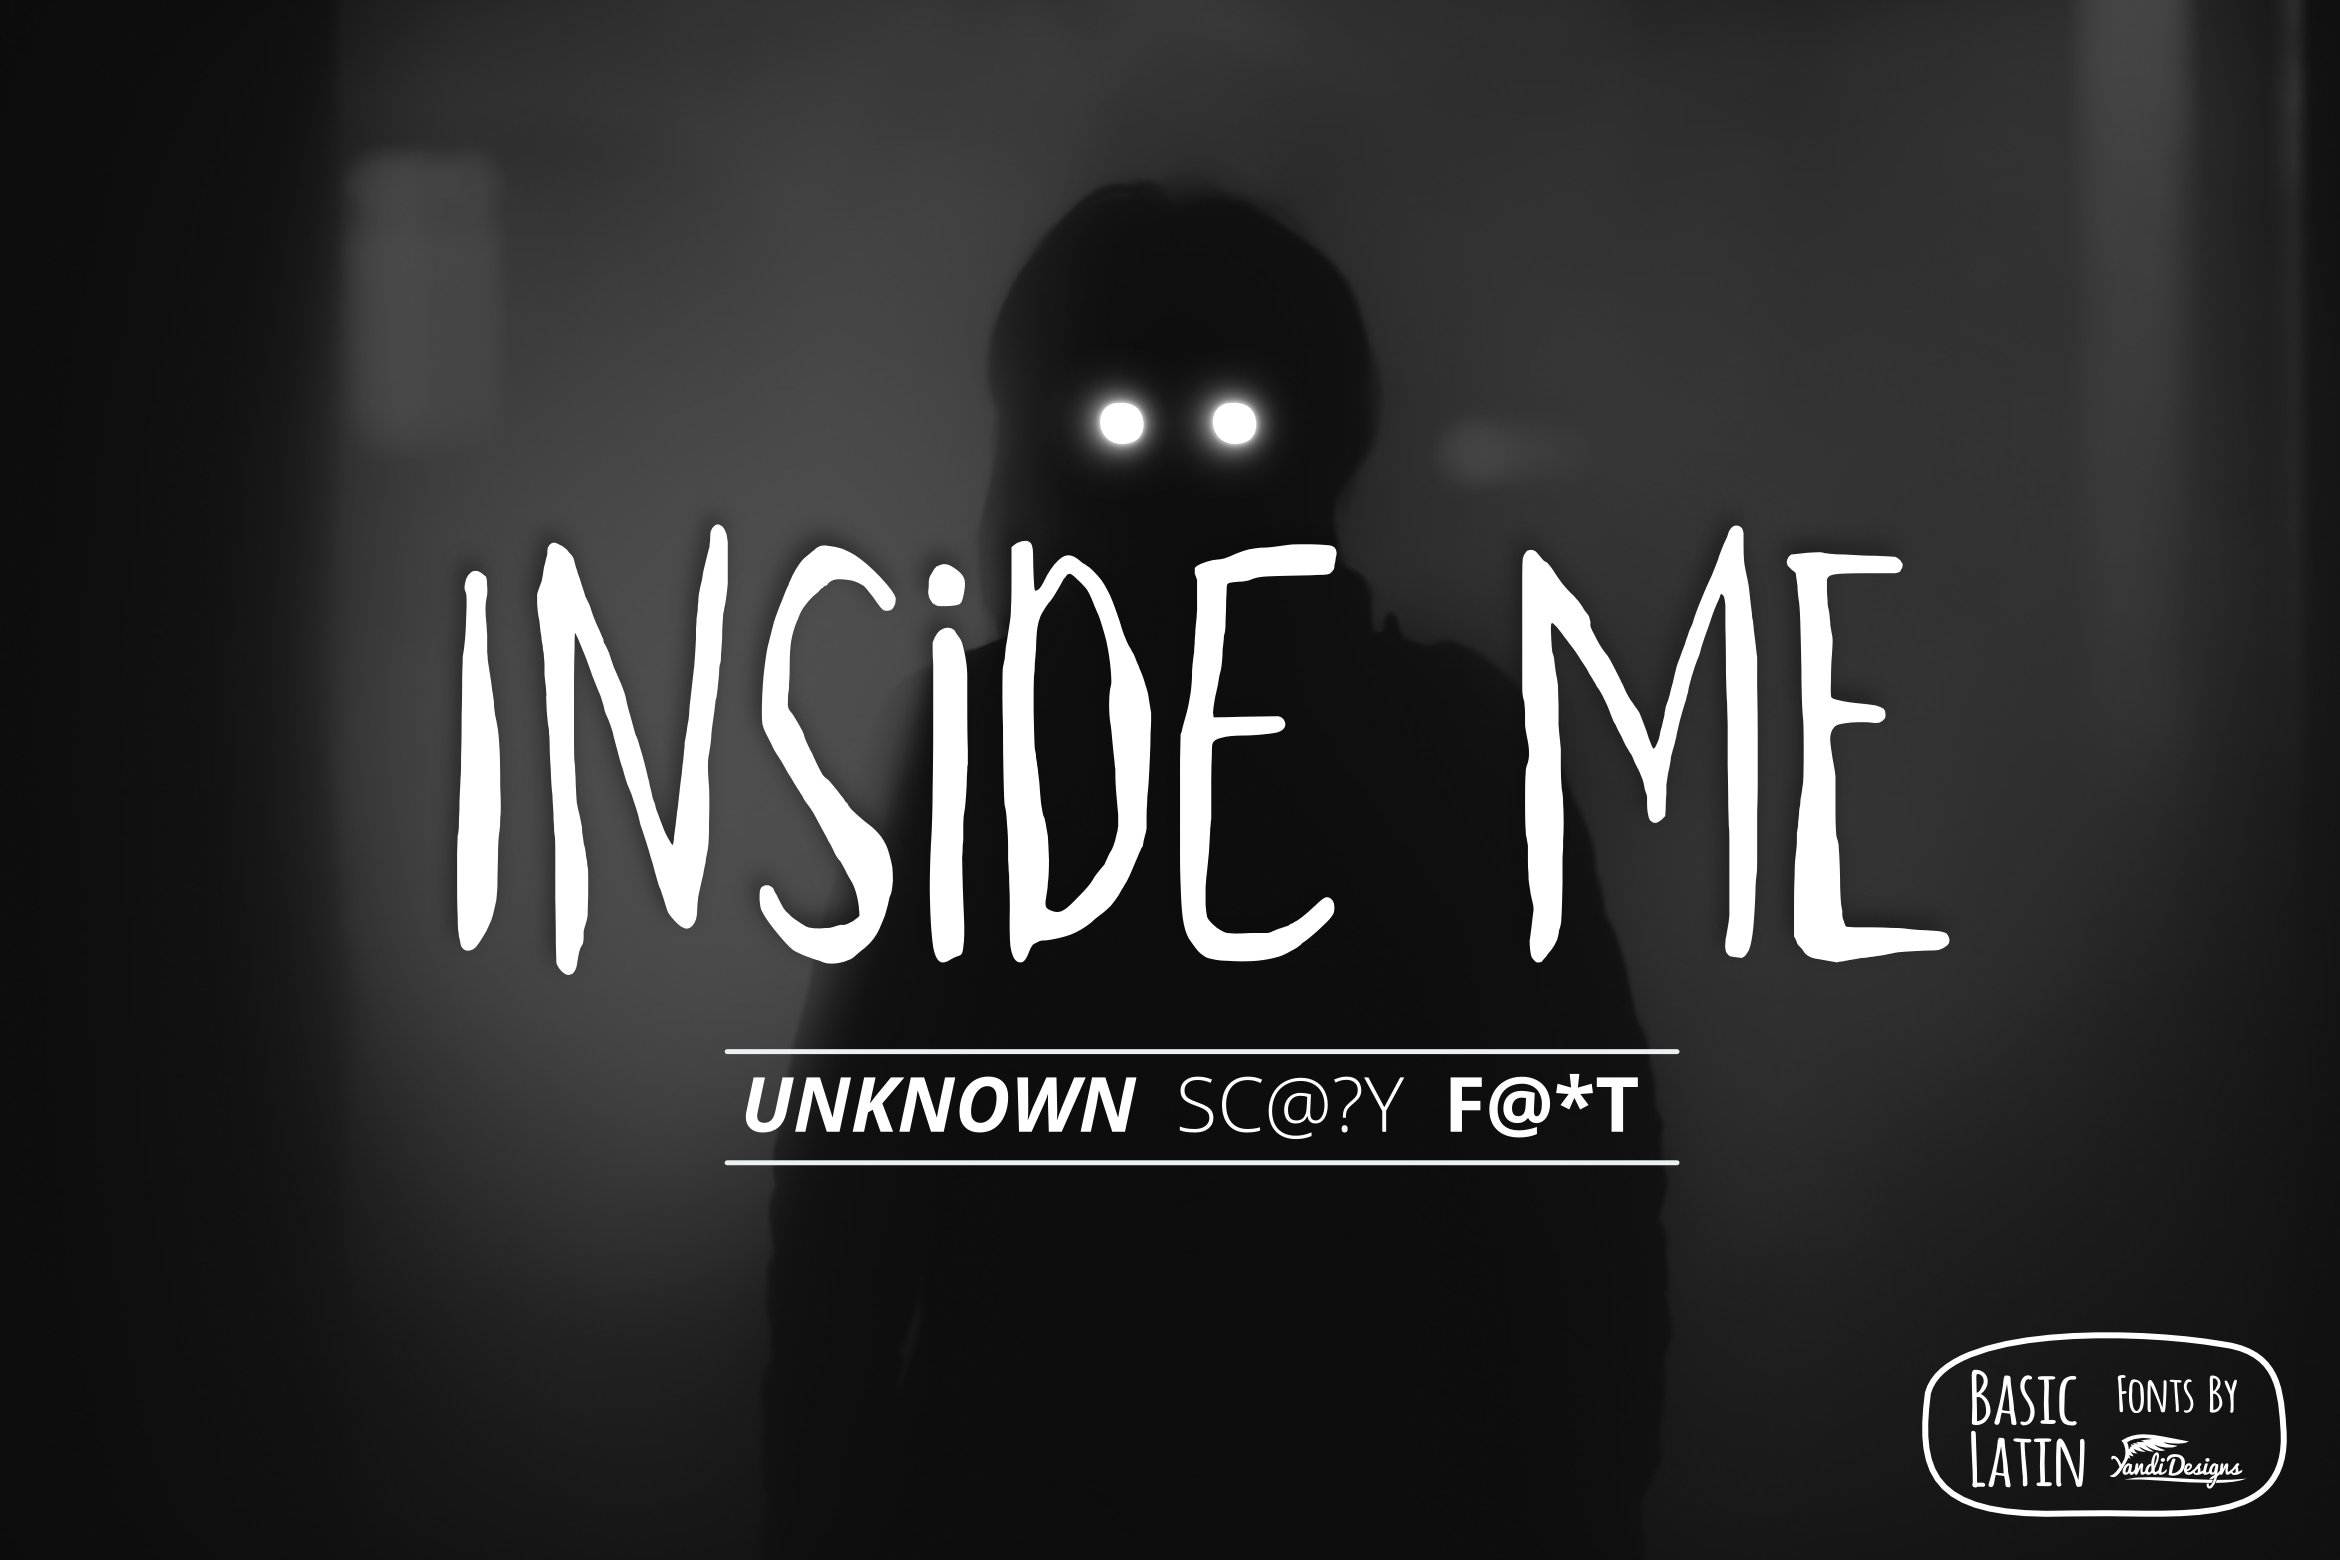 Inside Me Font cover image.